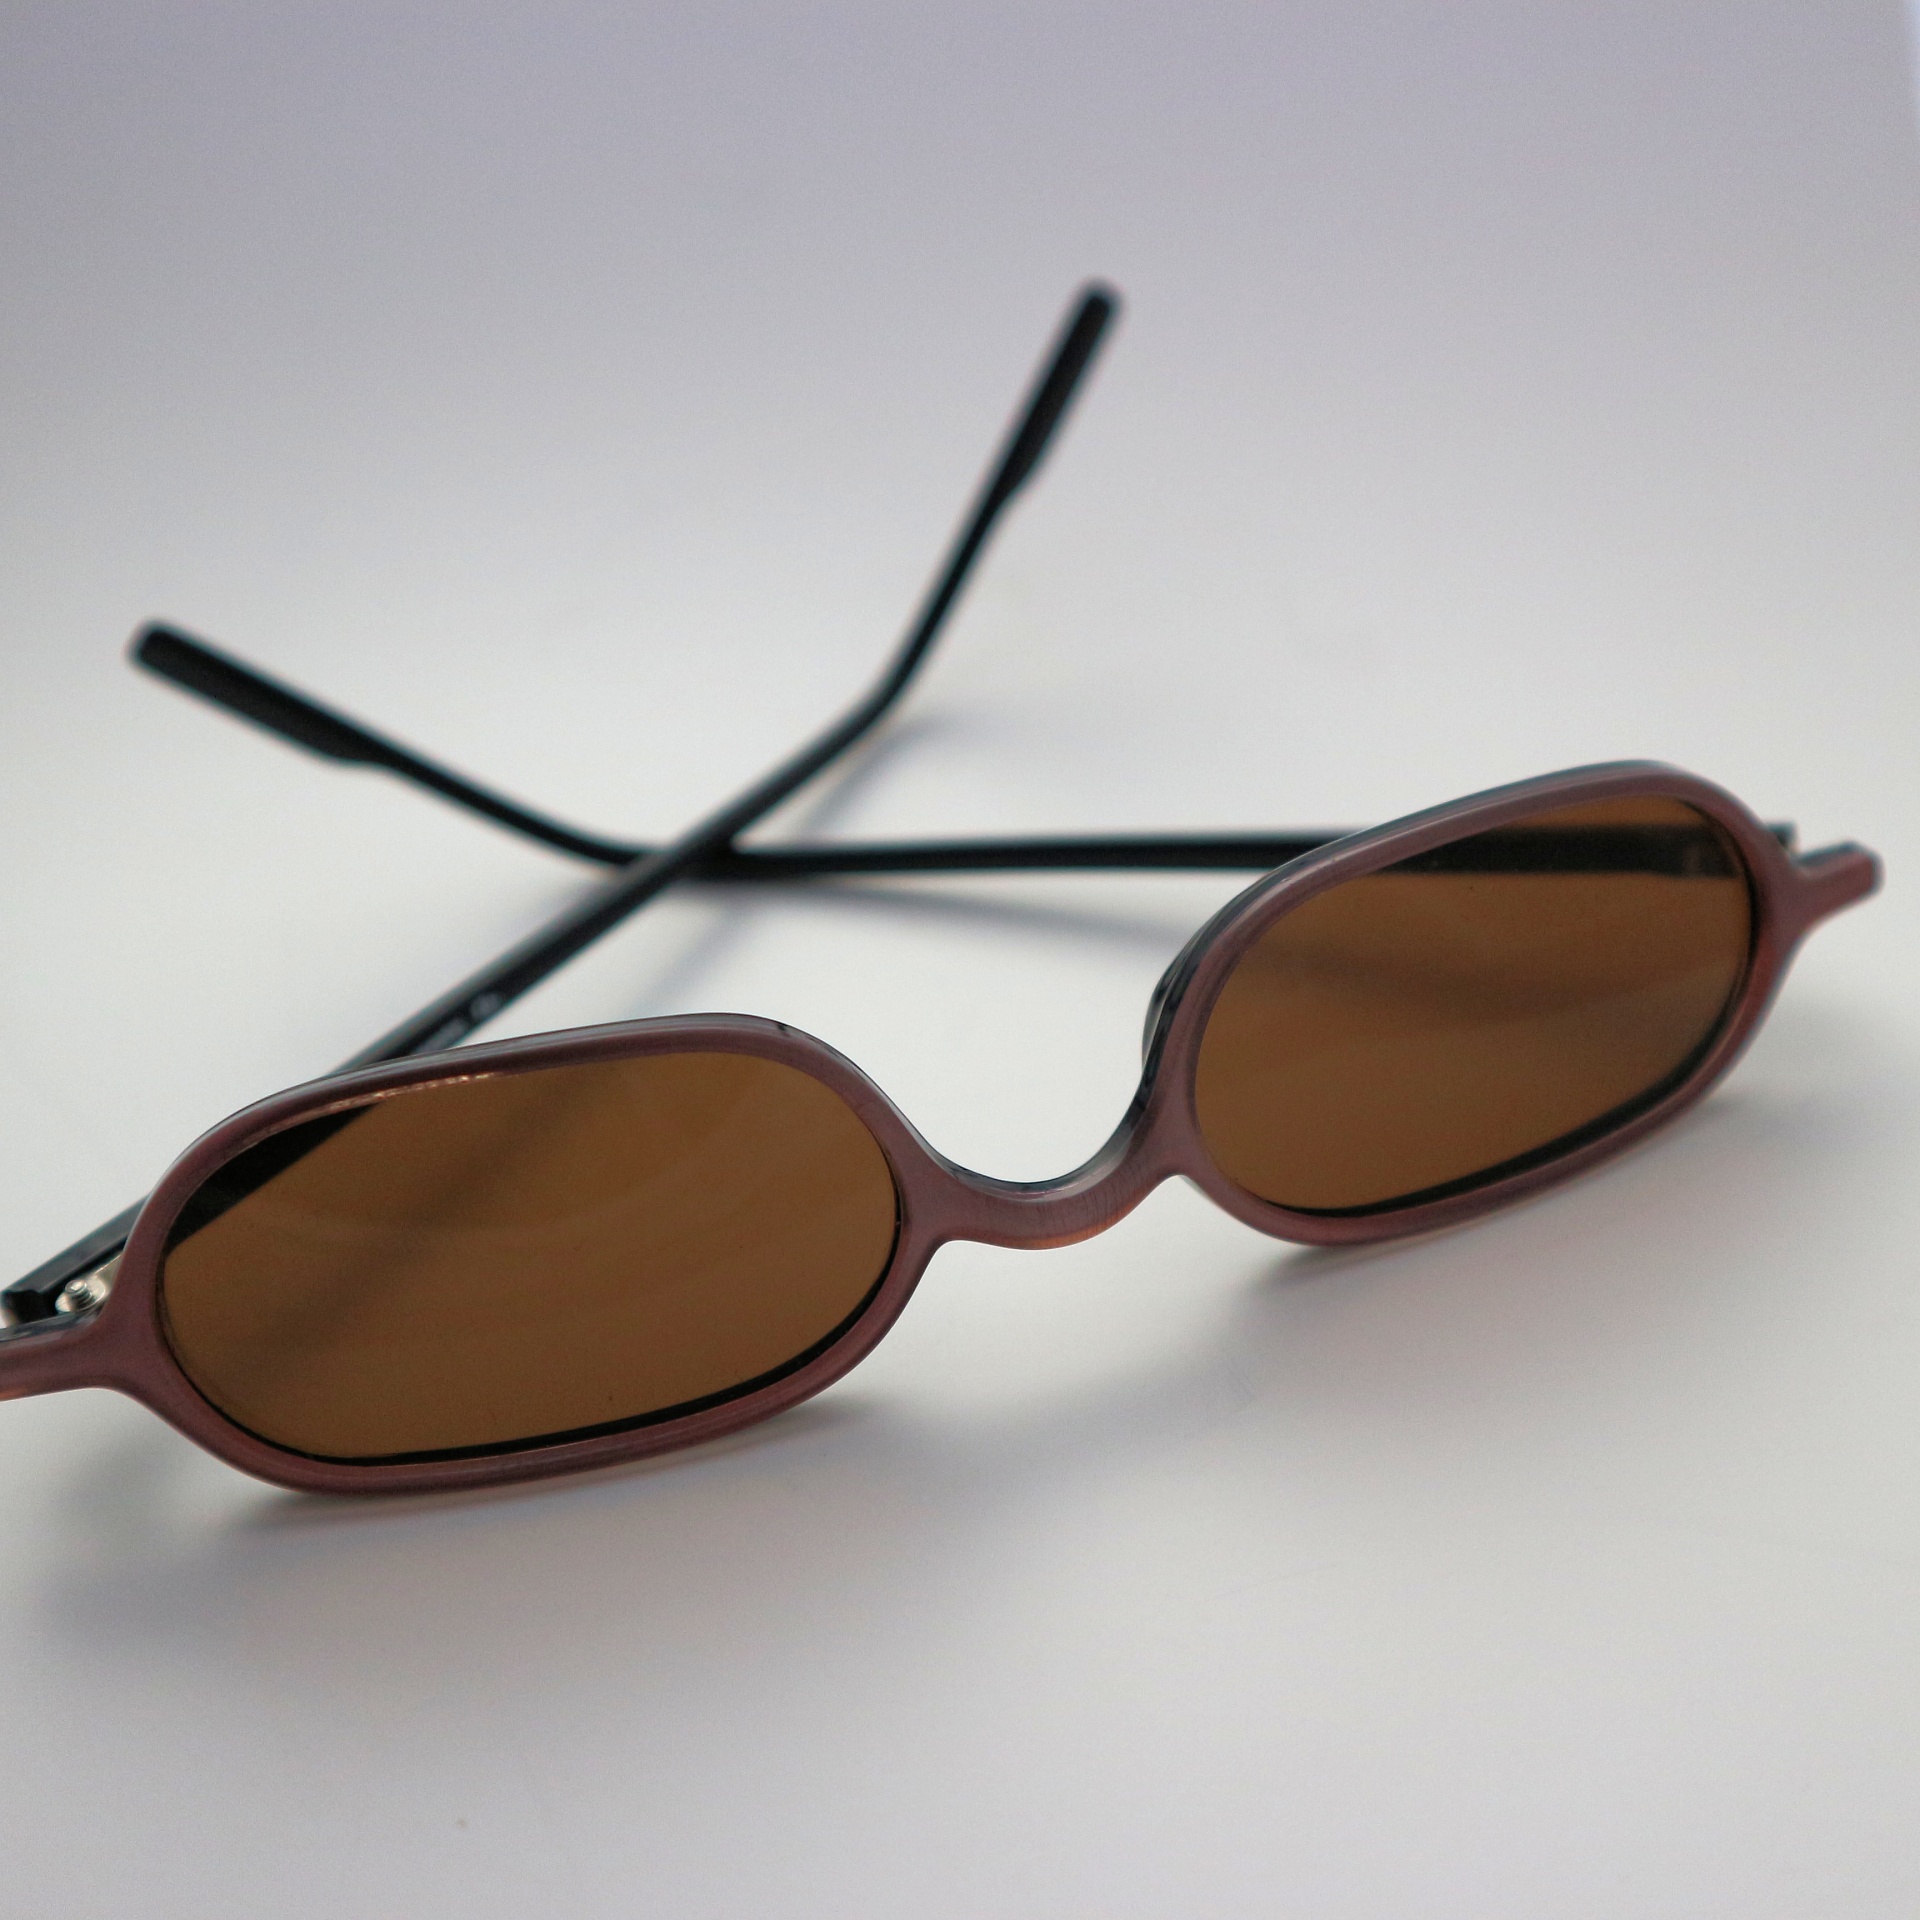 sunglasses-free-stock-photo-public-domain-pictures